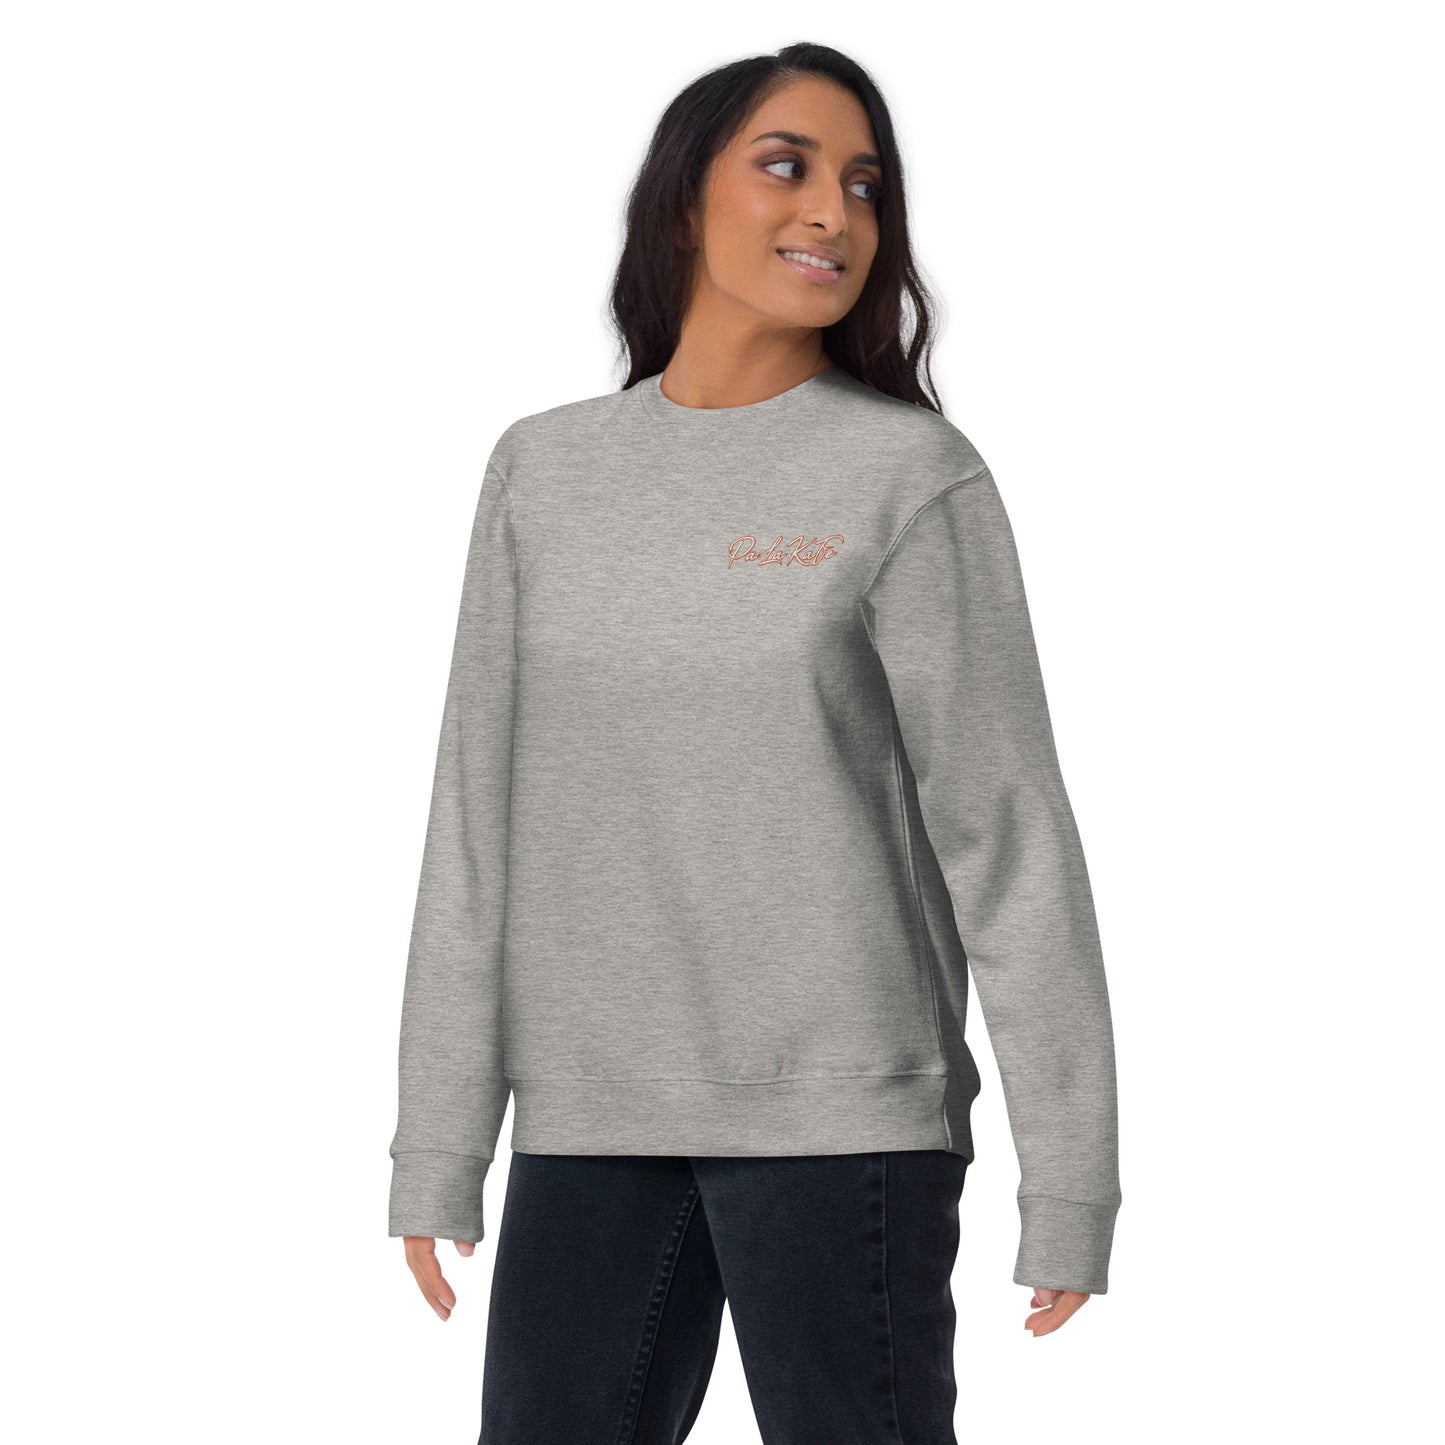 PaLaKaFe Premium Unisex Sweatshirt